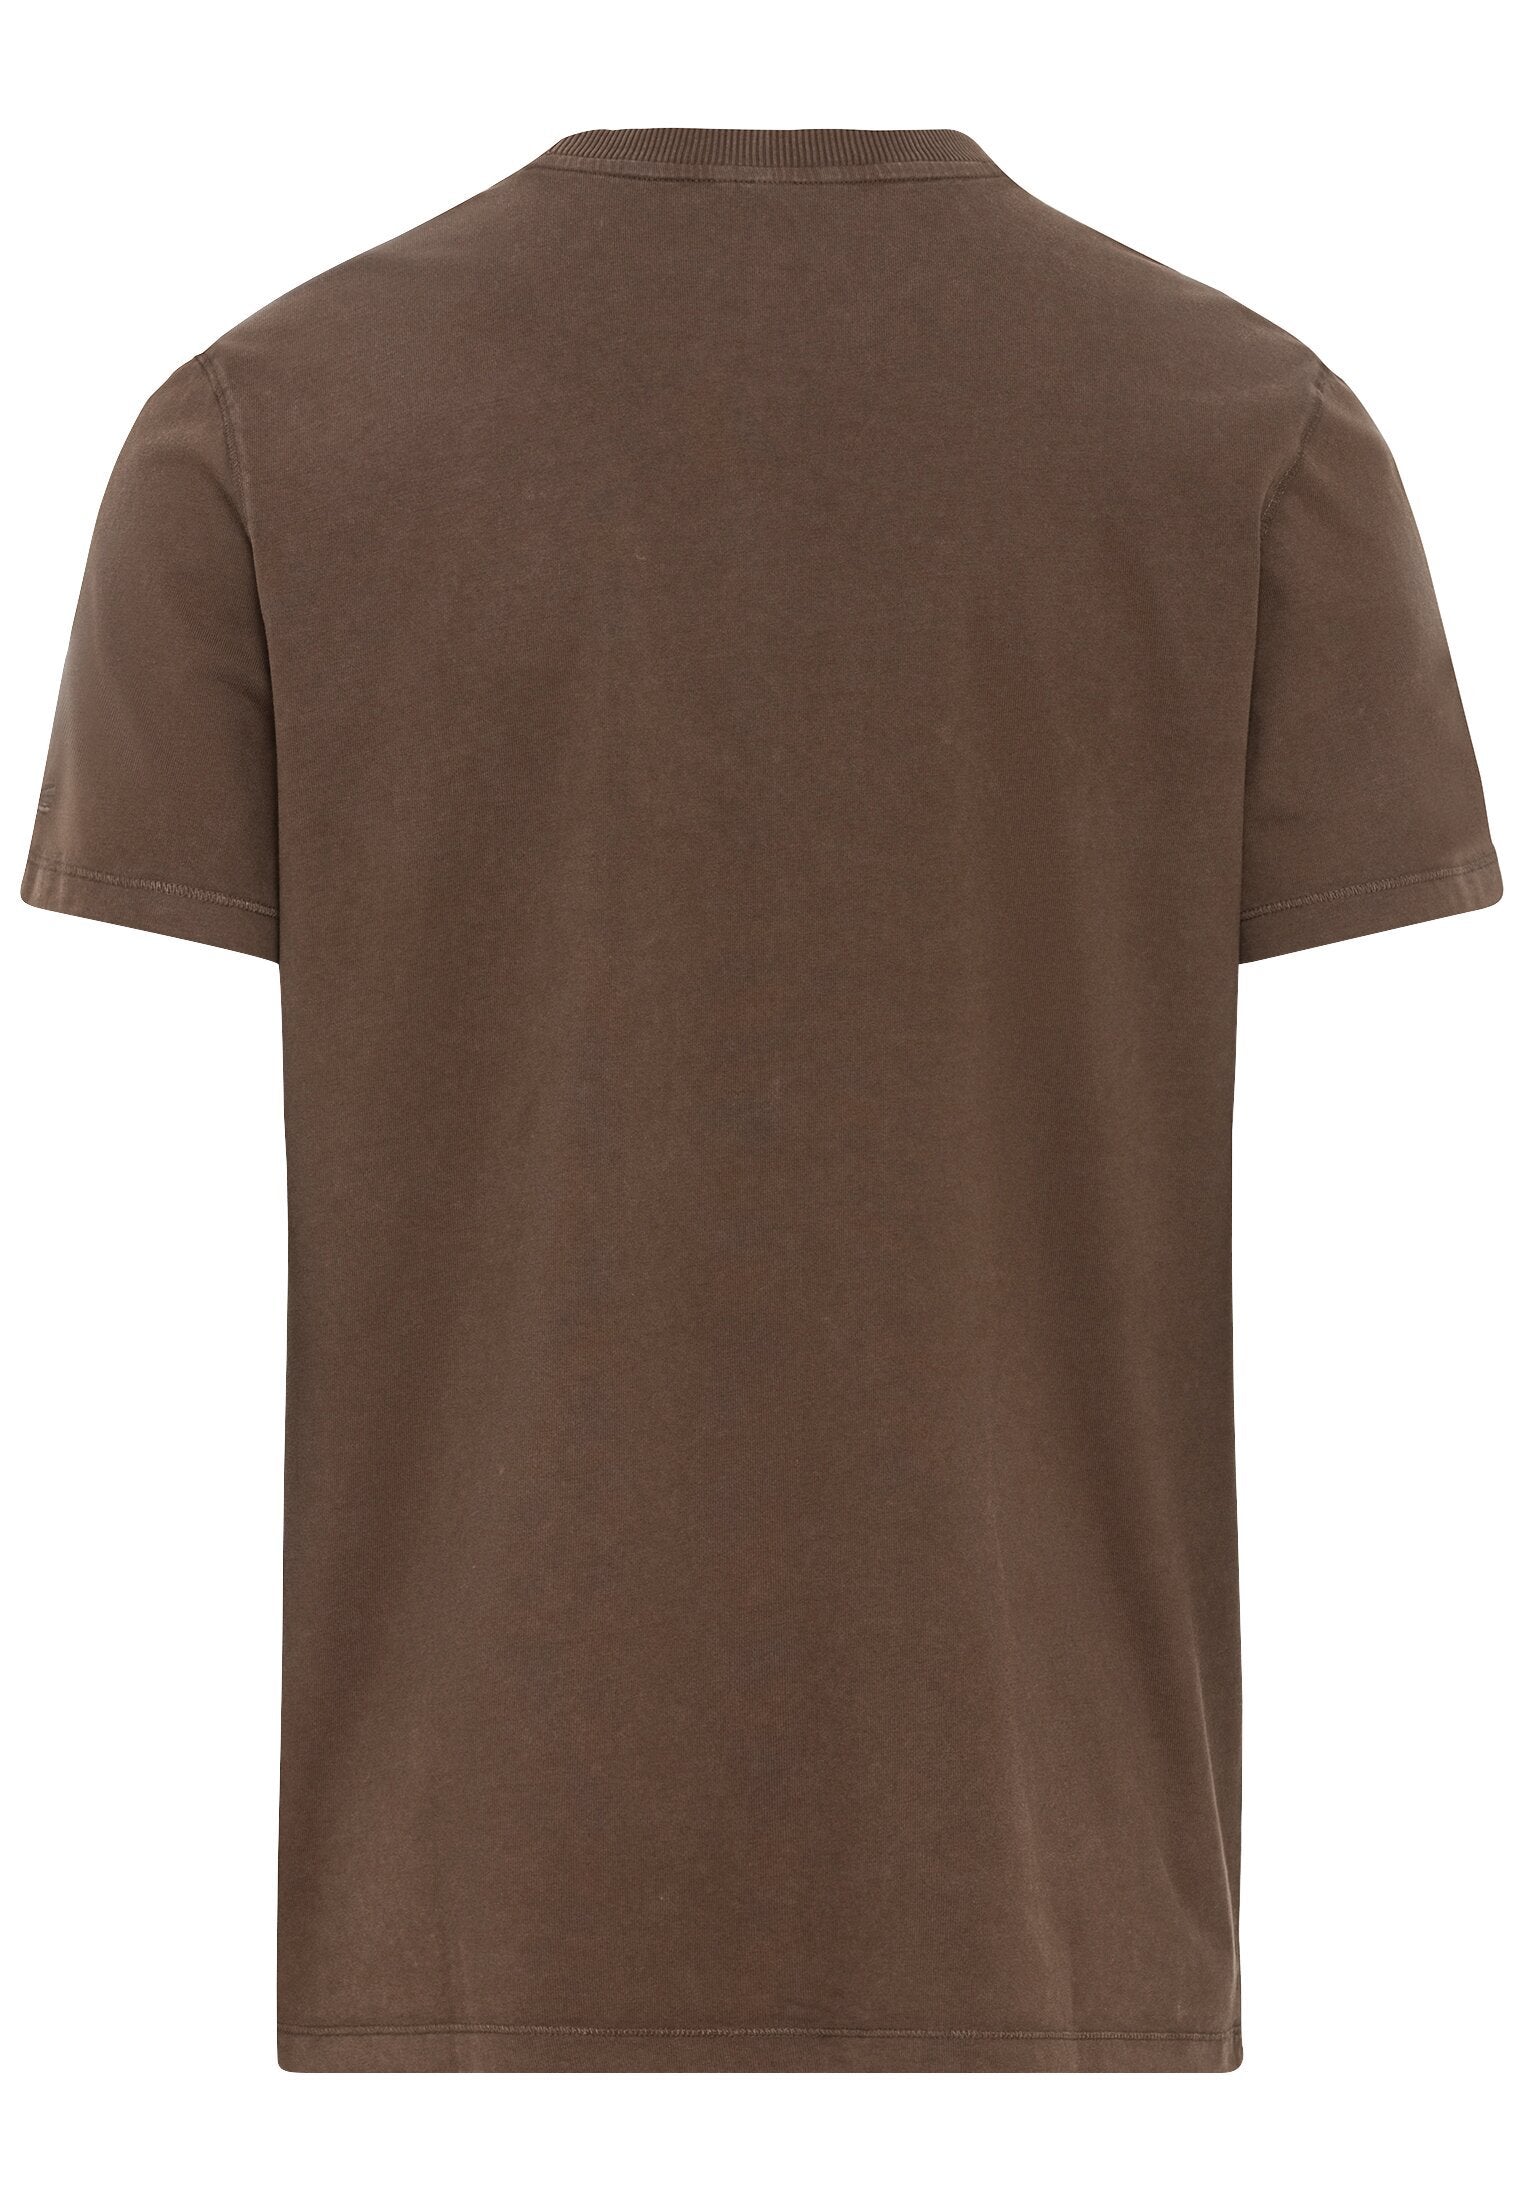 Kurzarm T-Shirt mit Naturprint (Dark Choclate)